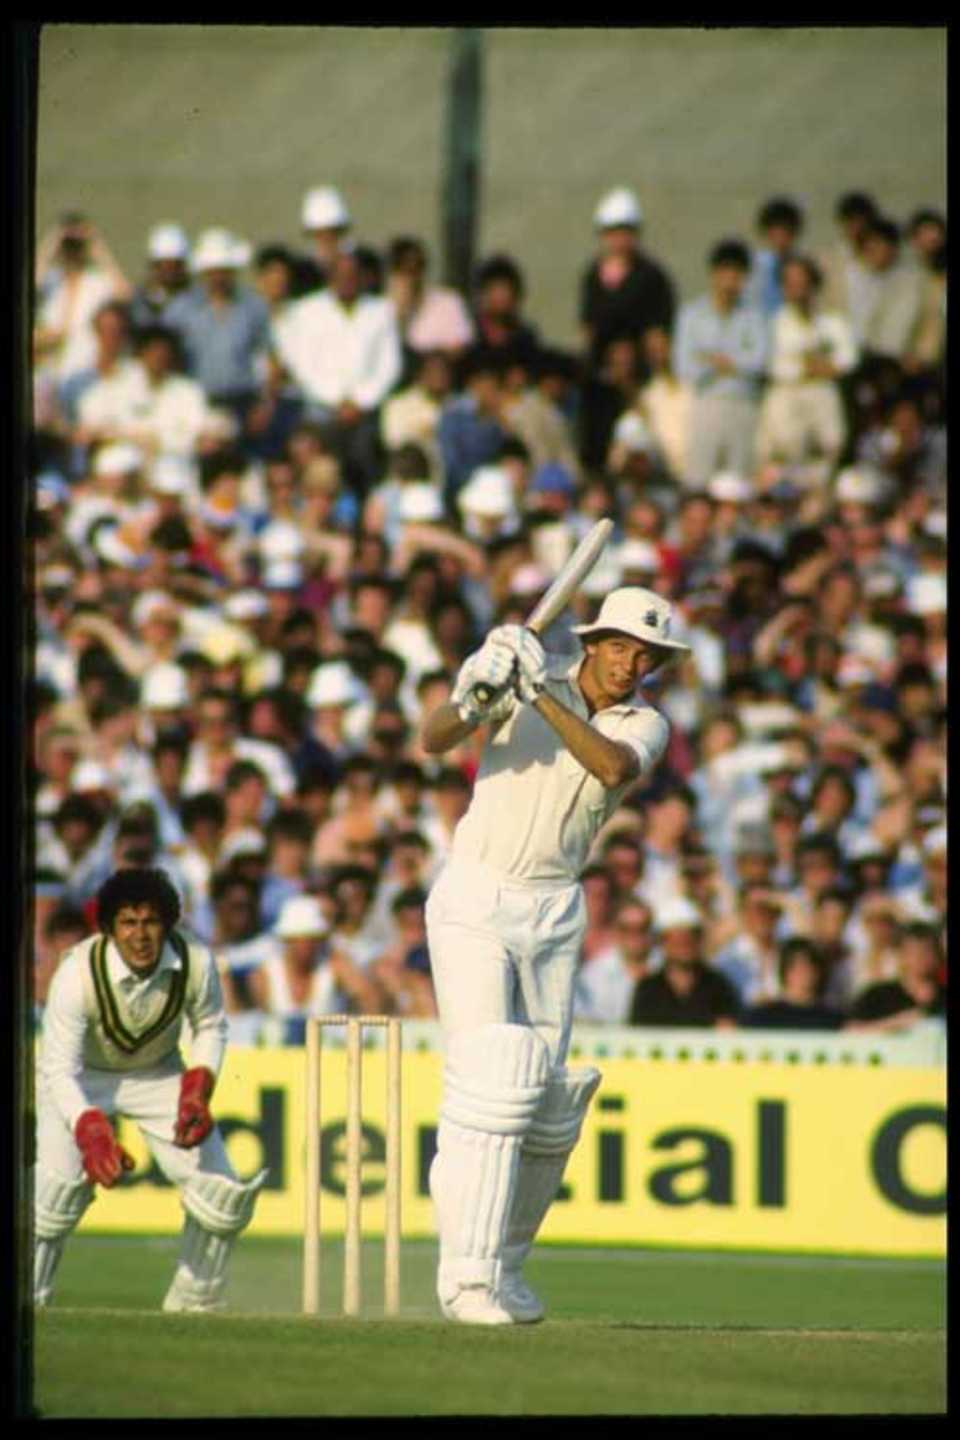 David Gower bats in a 1983 World Cup match against Pakistan